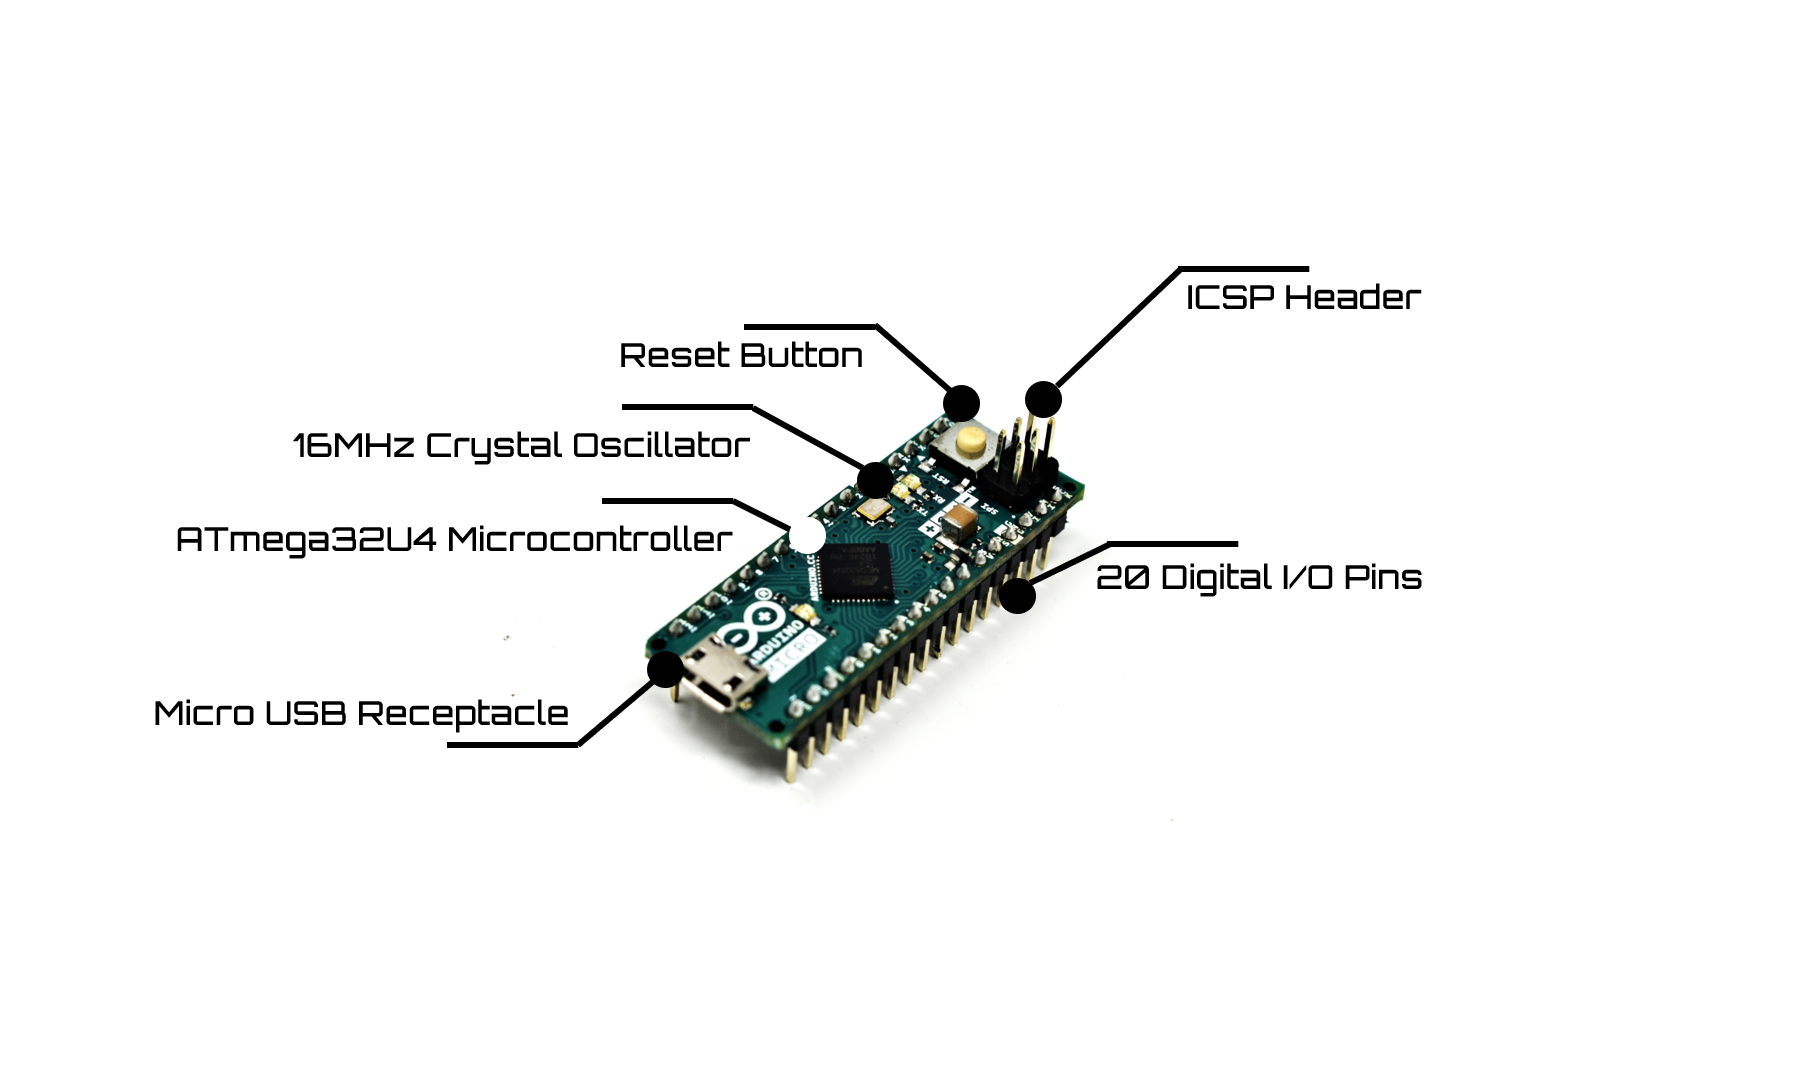 Arduino Micro - ProteShea